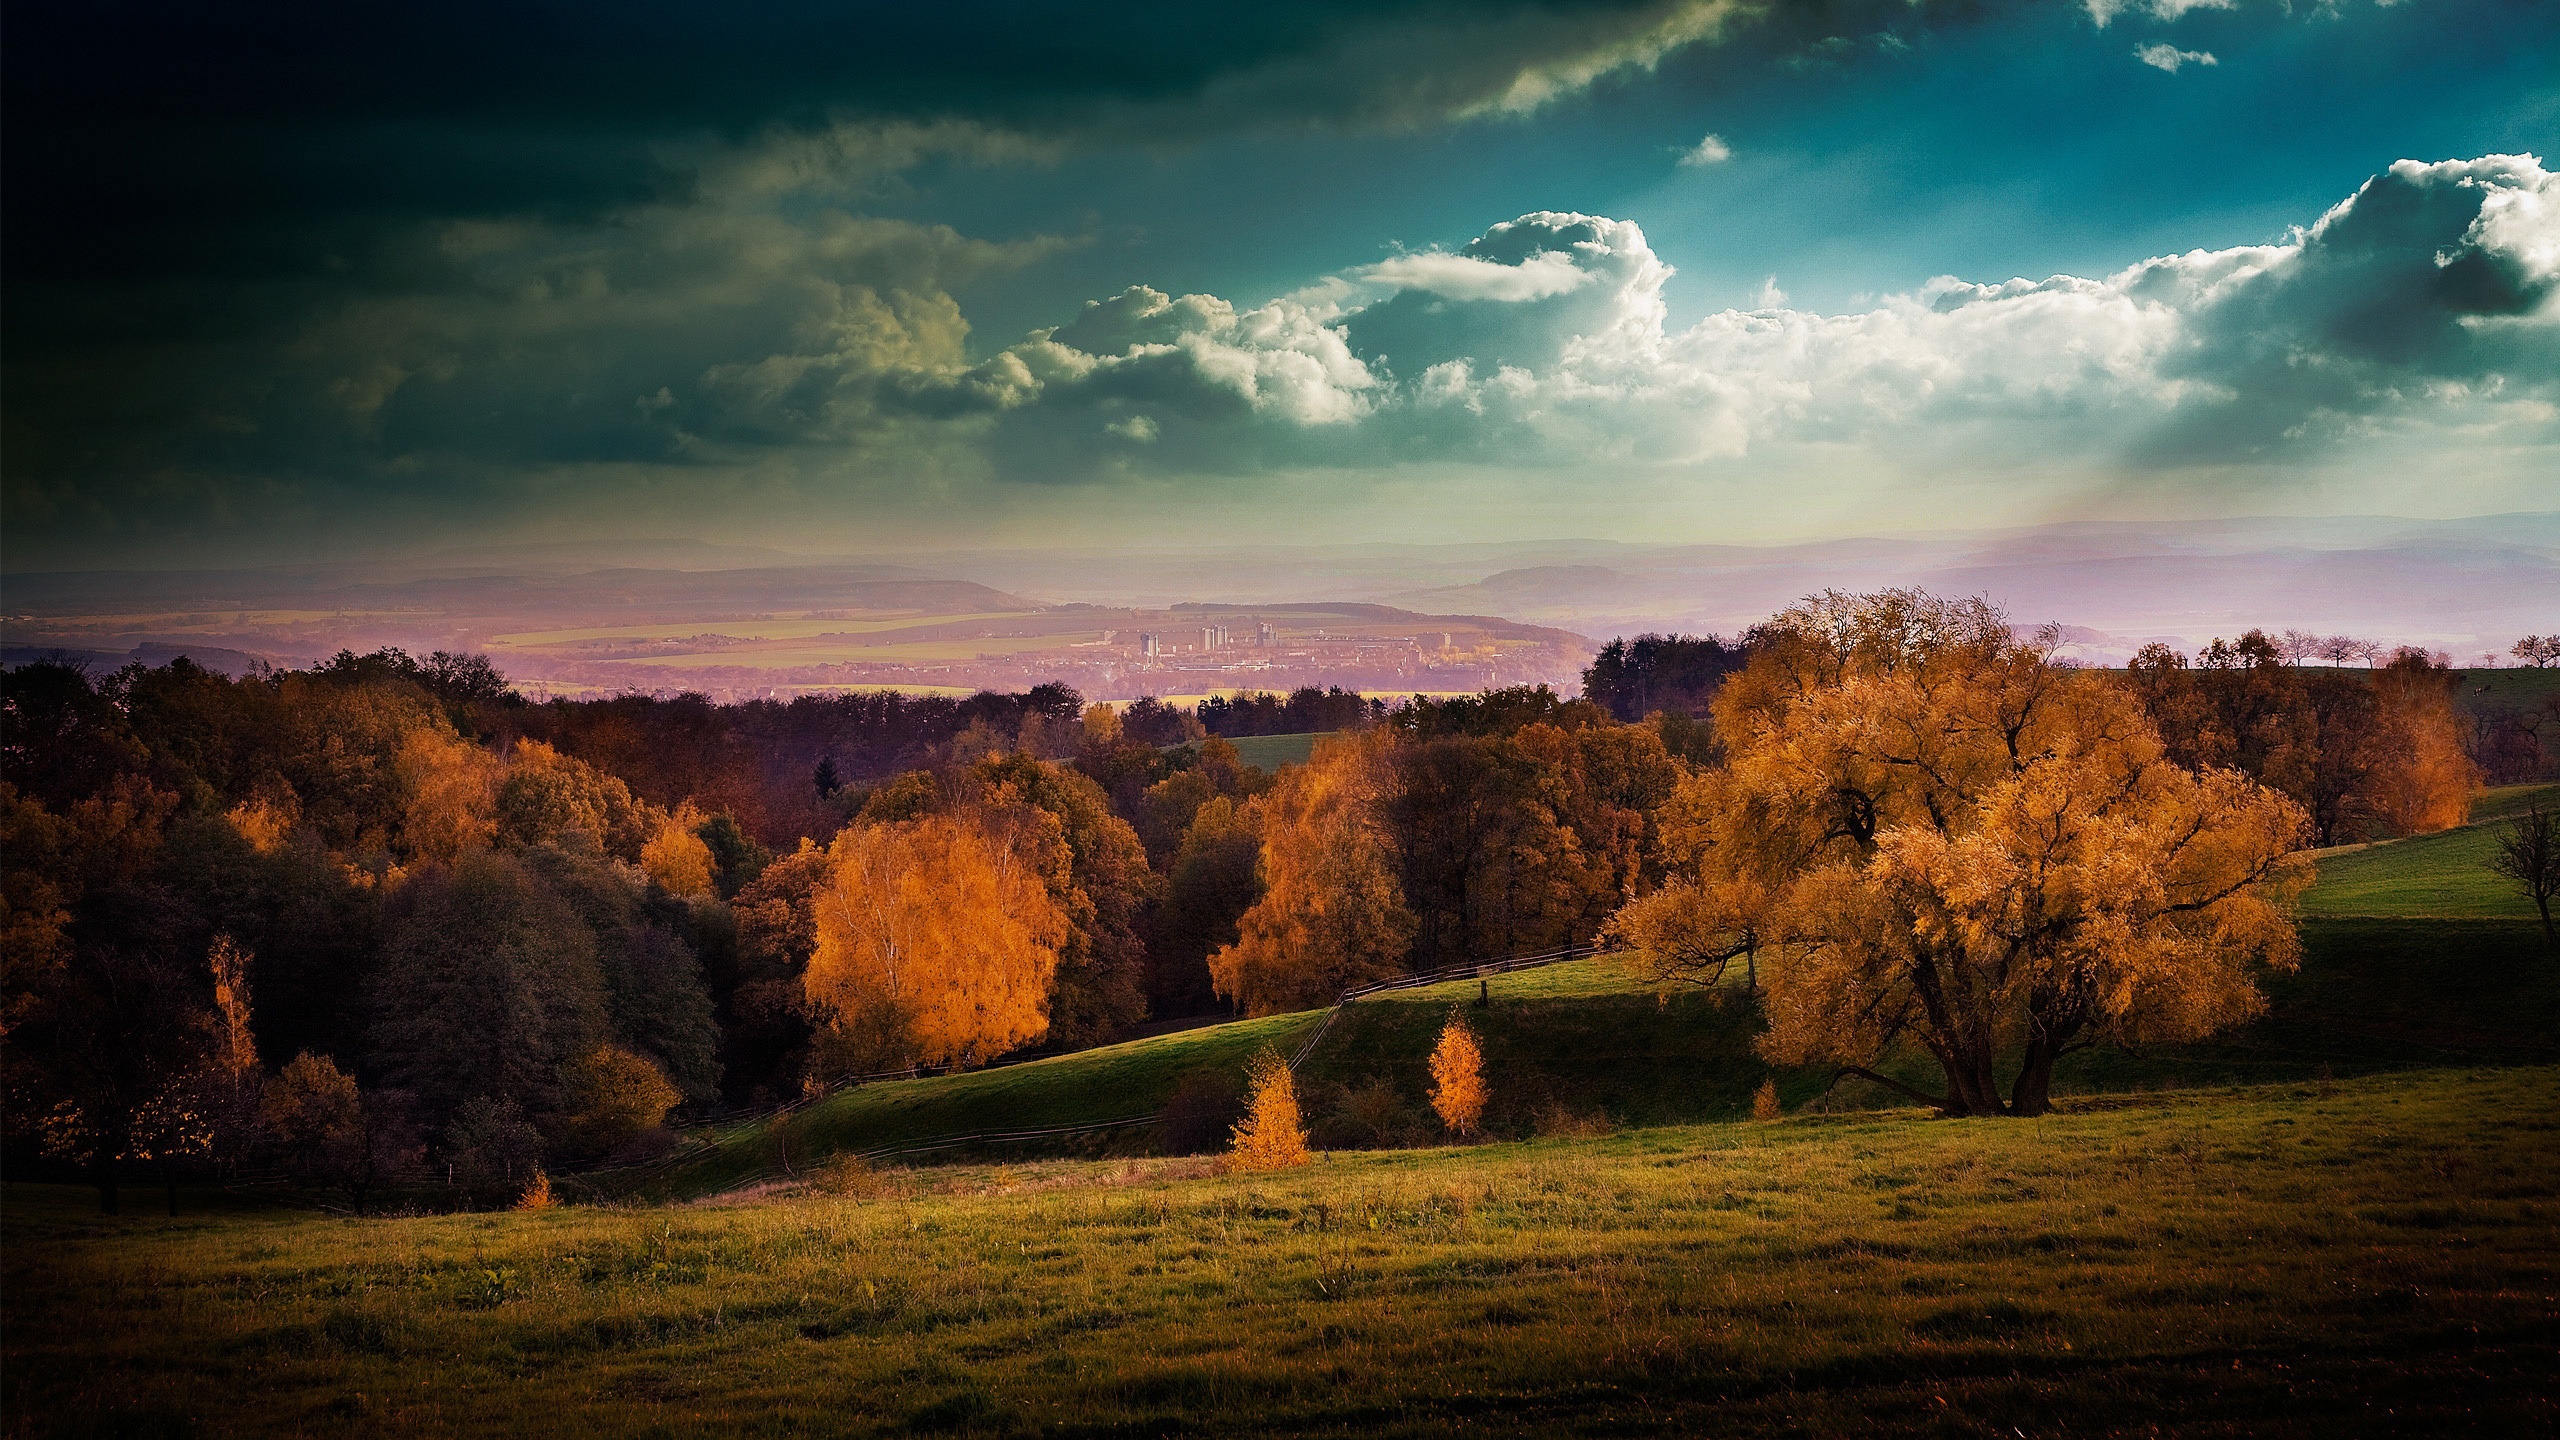 Superb Autumn Landscape for 2560x1440 HDTV resolution